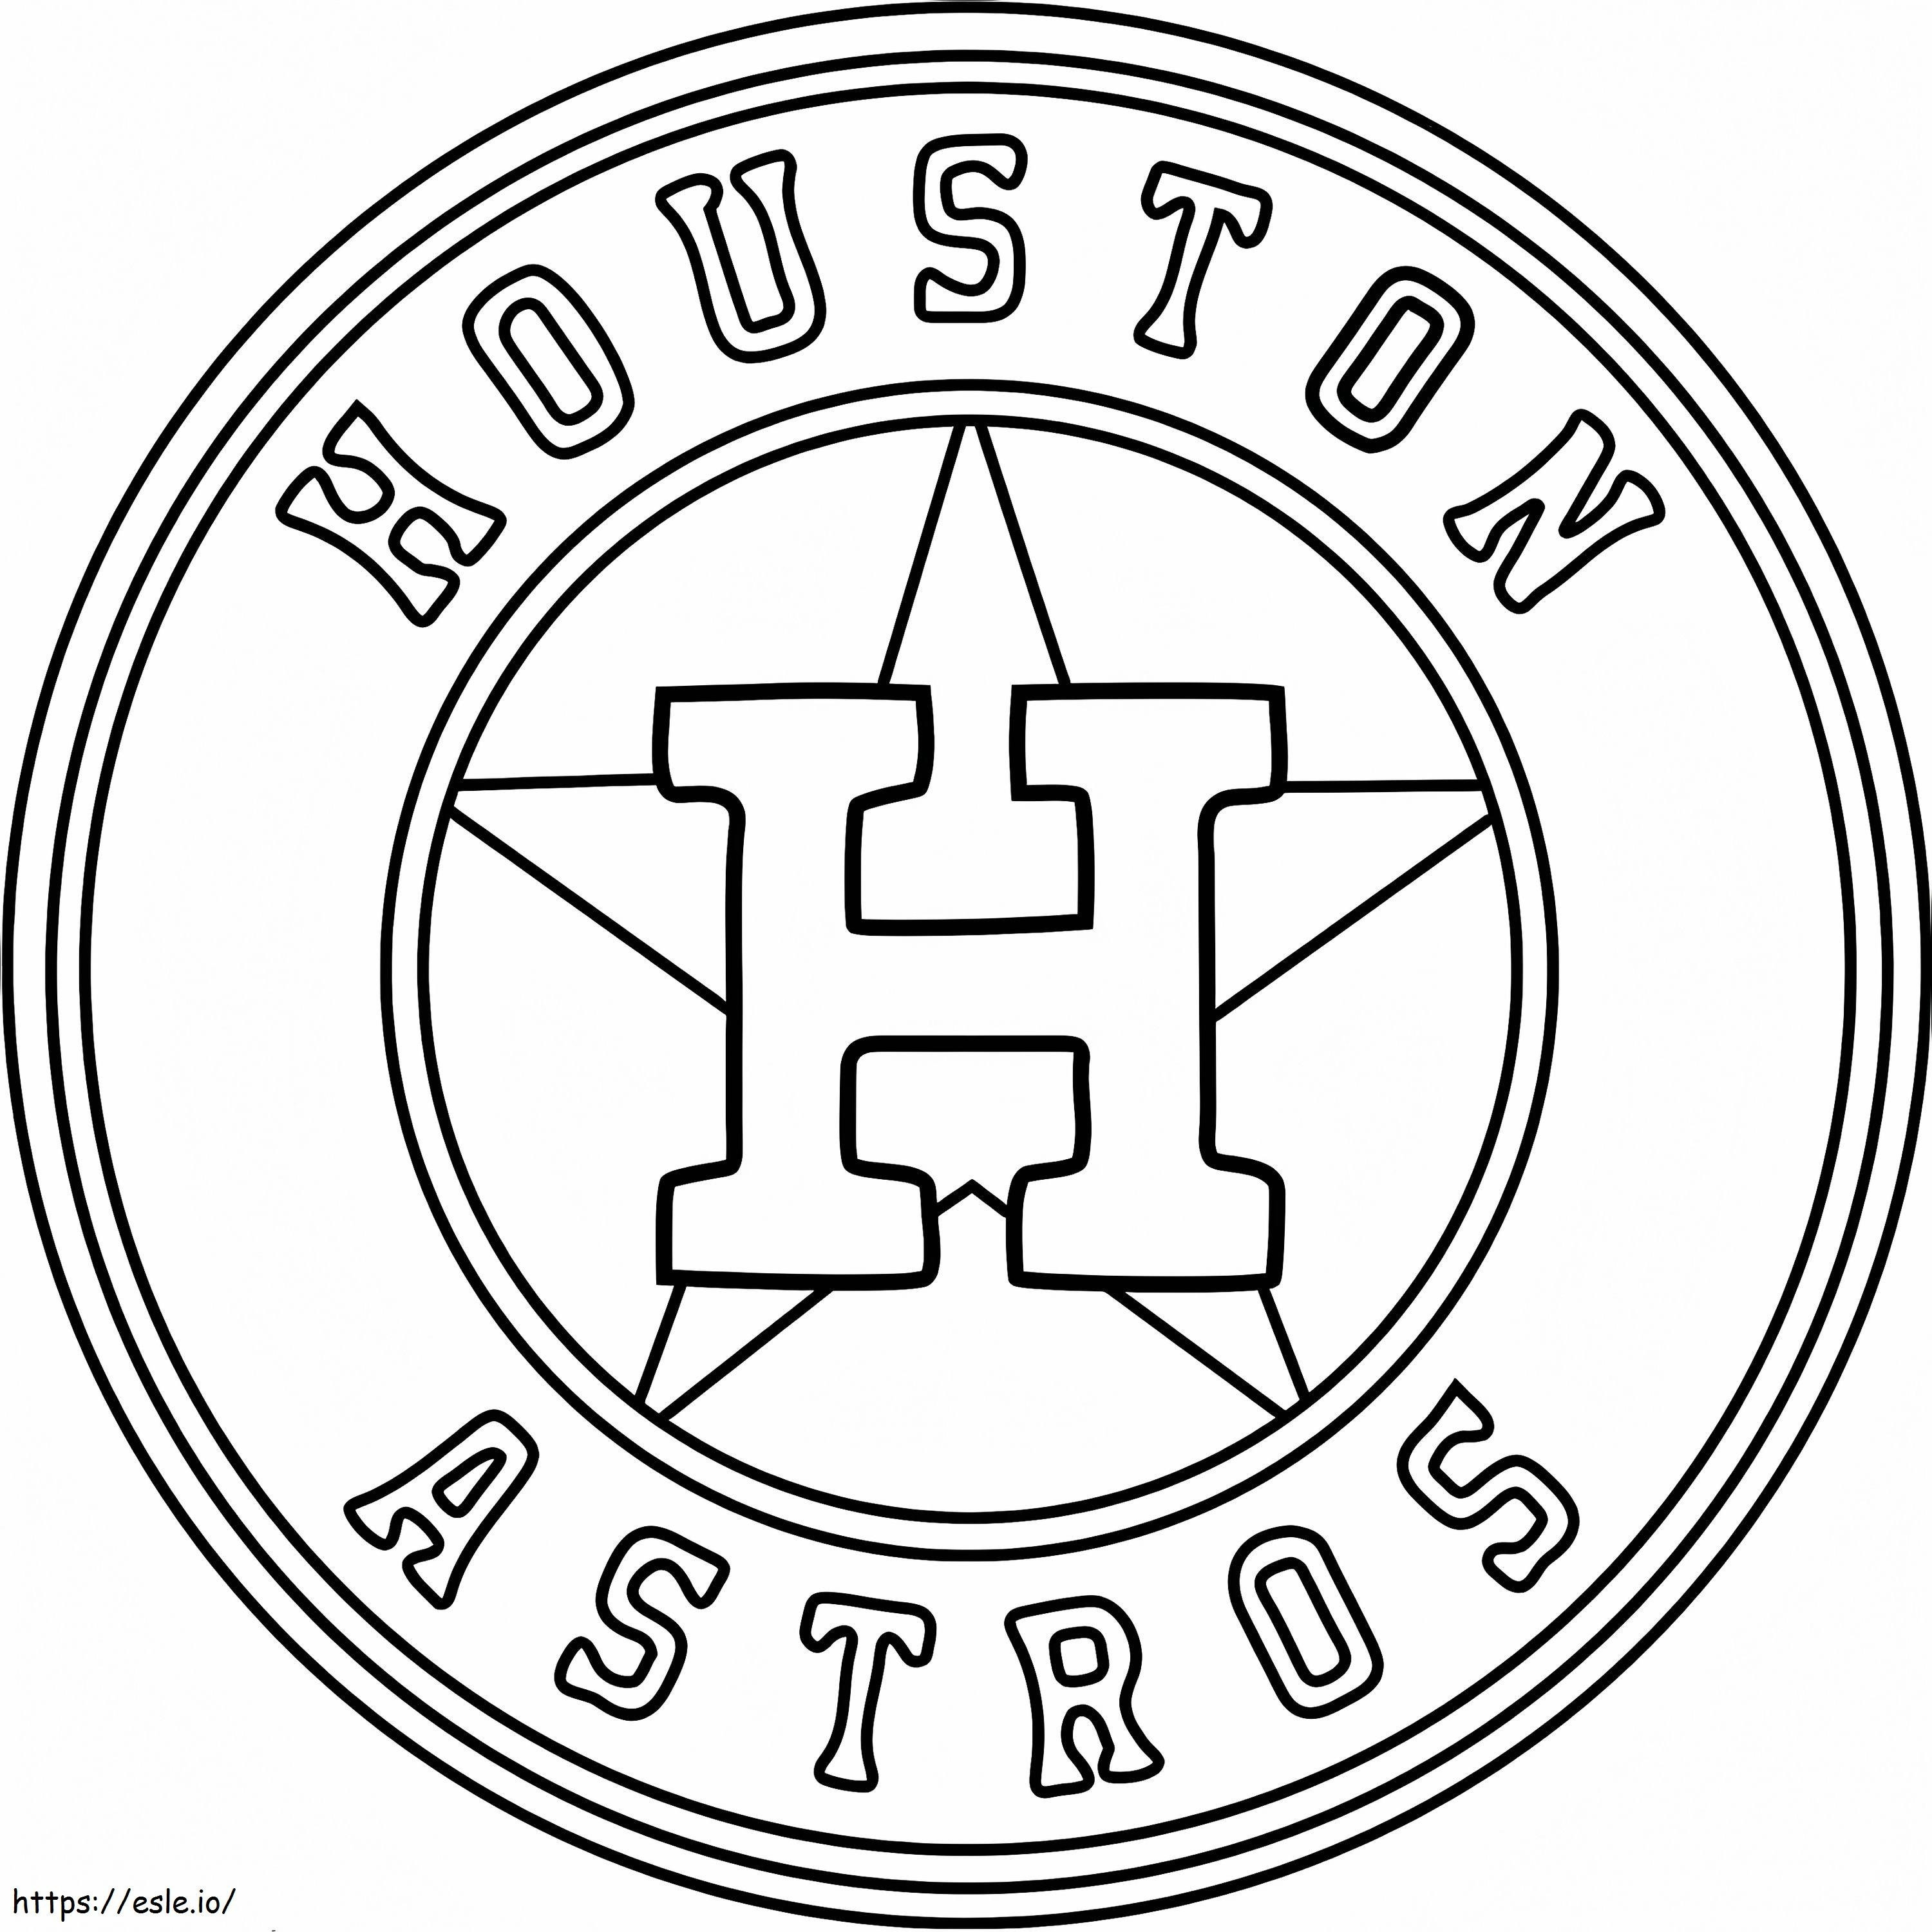 Houston Astros-logo kleurplaat kleurplaat